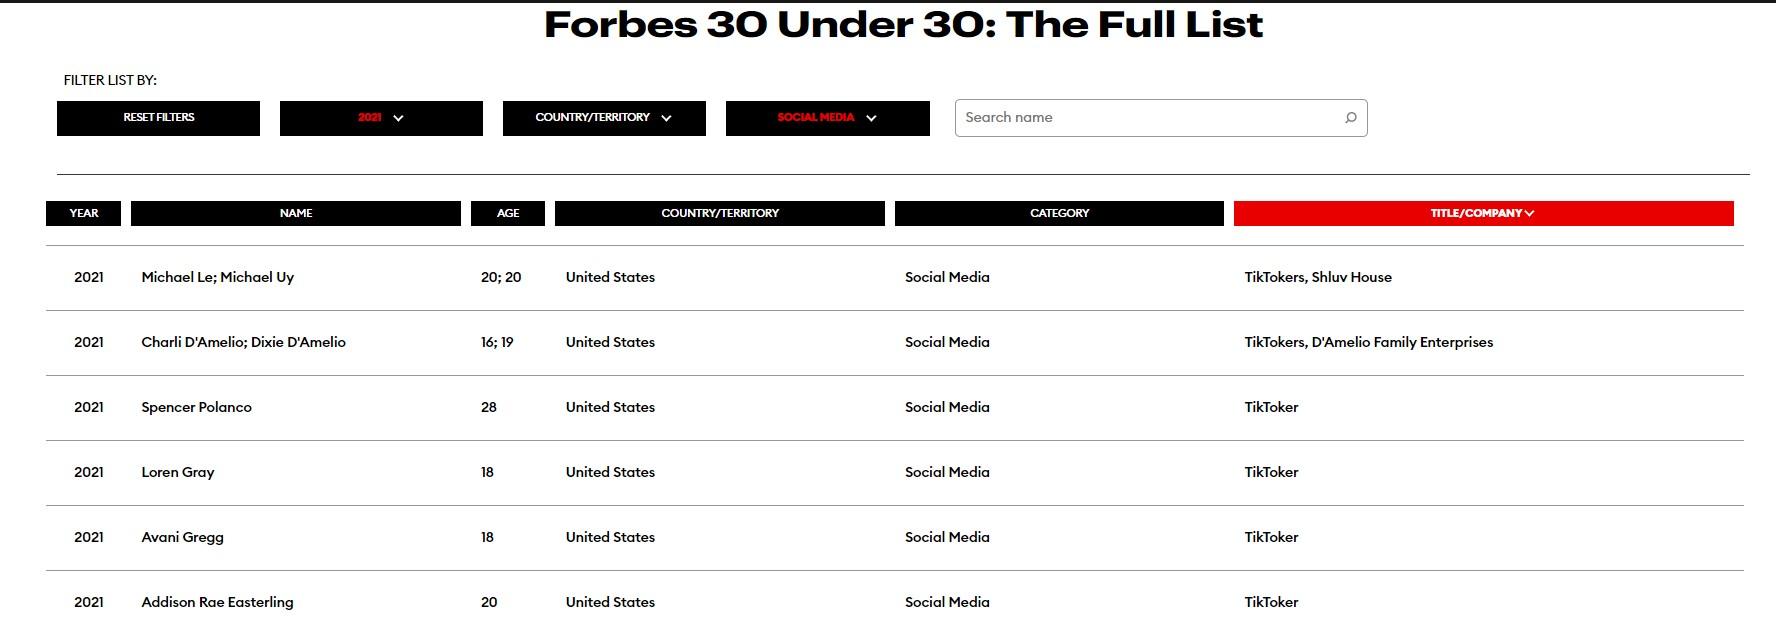 Forbes 30 under 30 social media list for 2021